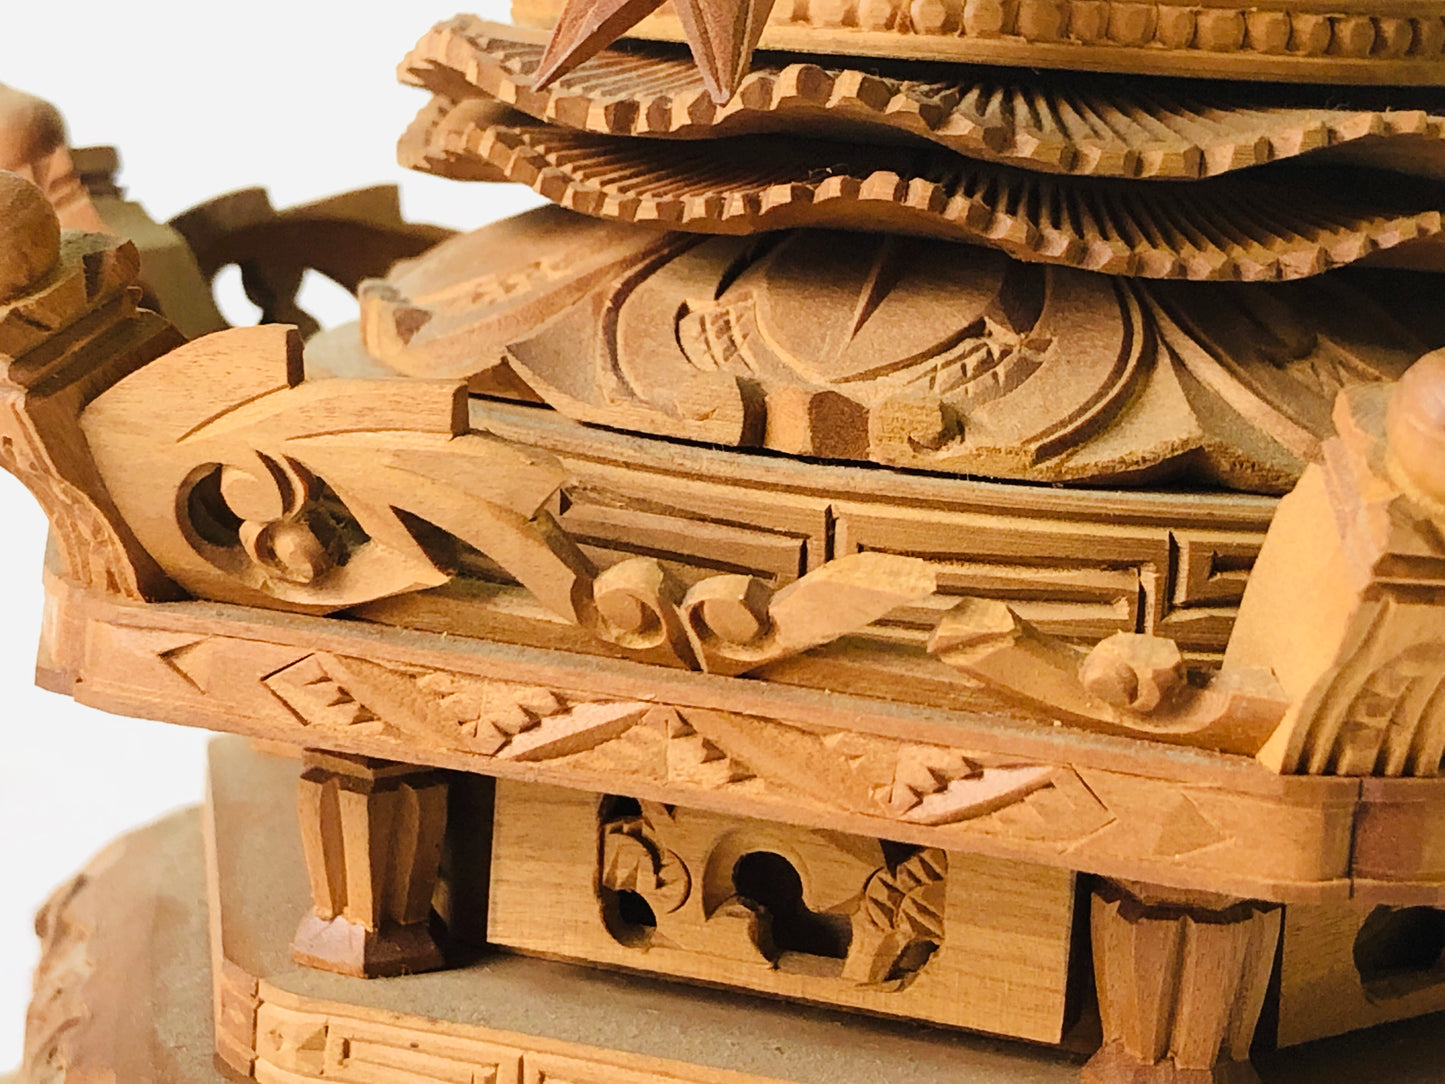 Y4945 STATUE wood carving Buddha figure sandalwood Japan antique decor vintage